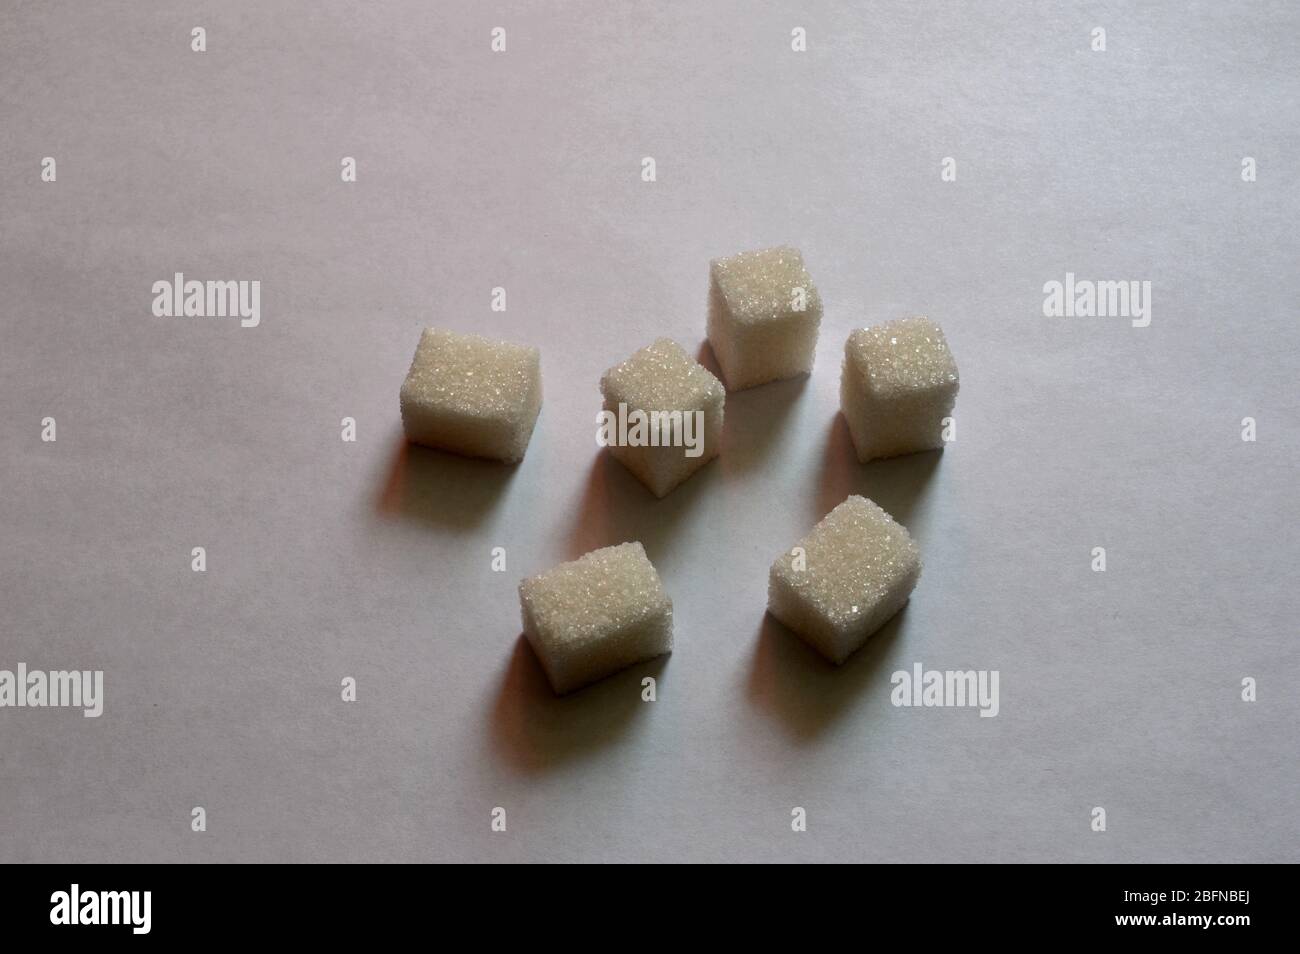 sugar cubes of refined sugar Stock Photo